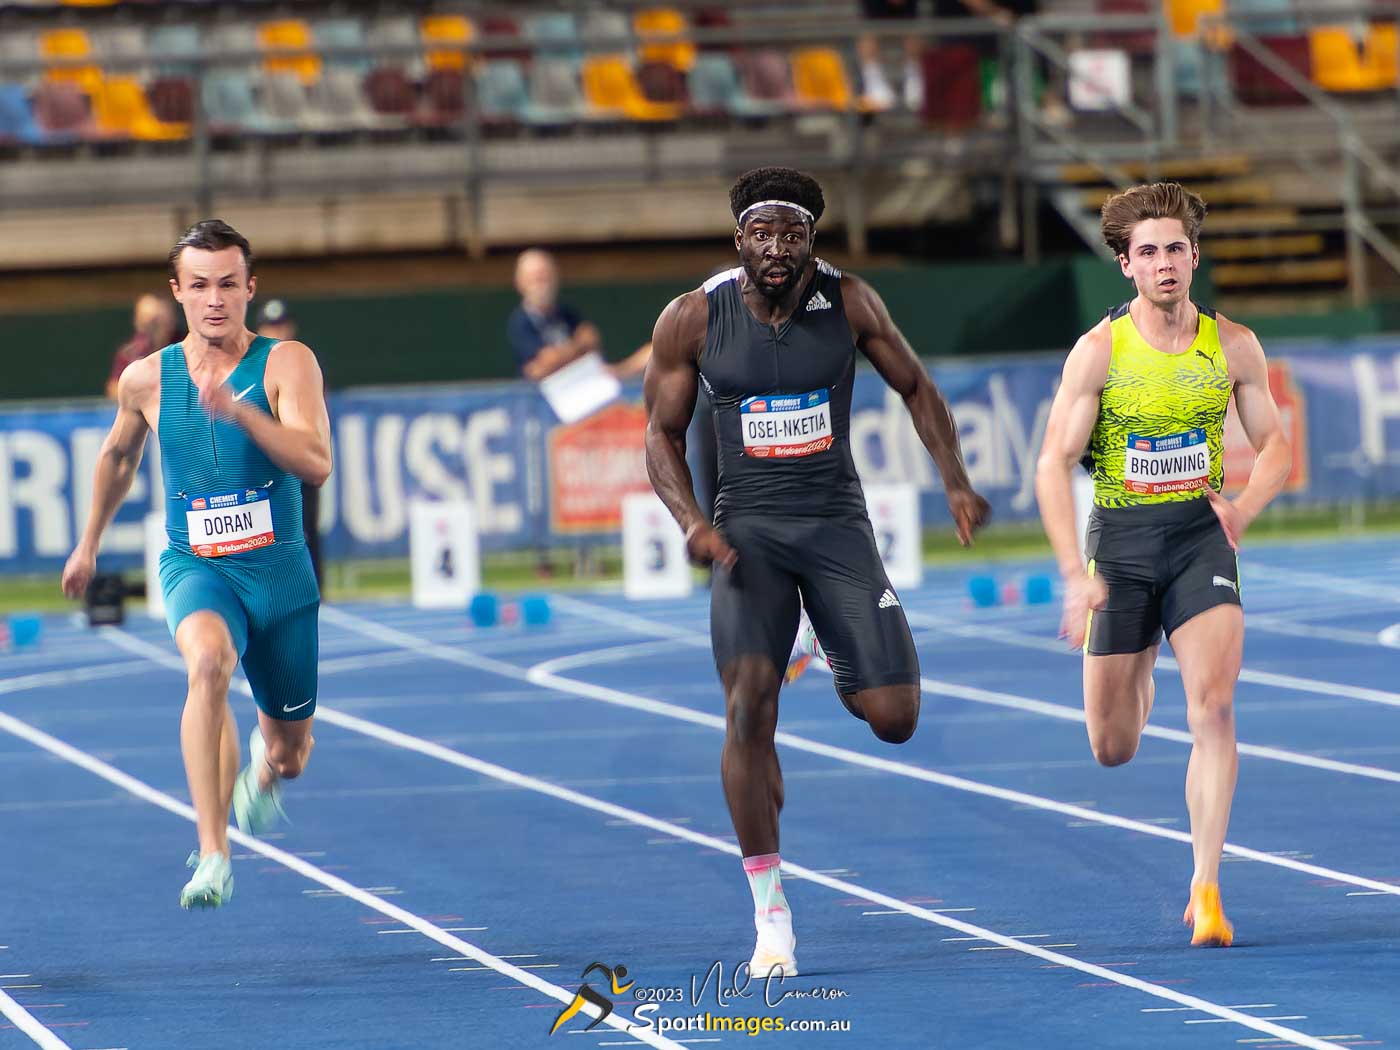 Jake Doran, Edward Osei-Nketia, Rohan Browning, Men's 100m A Race